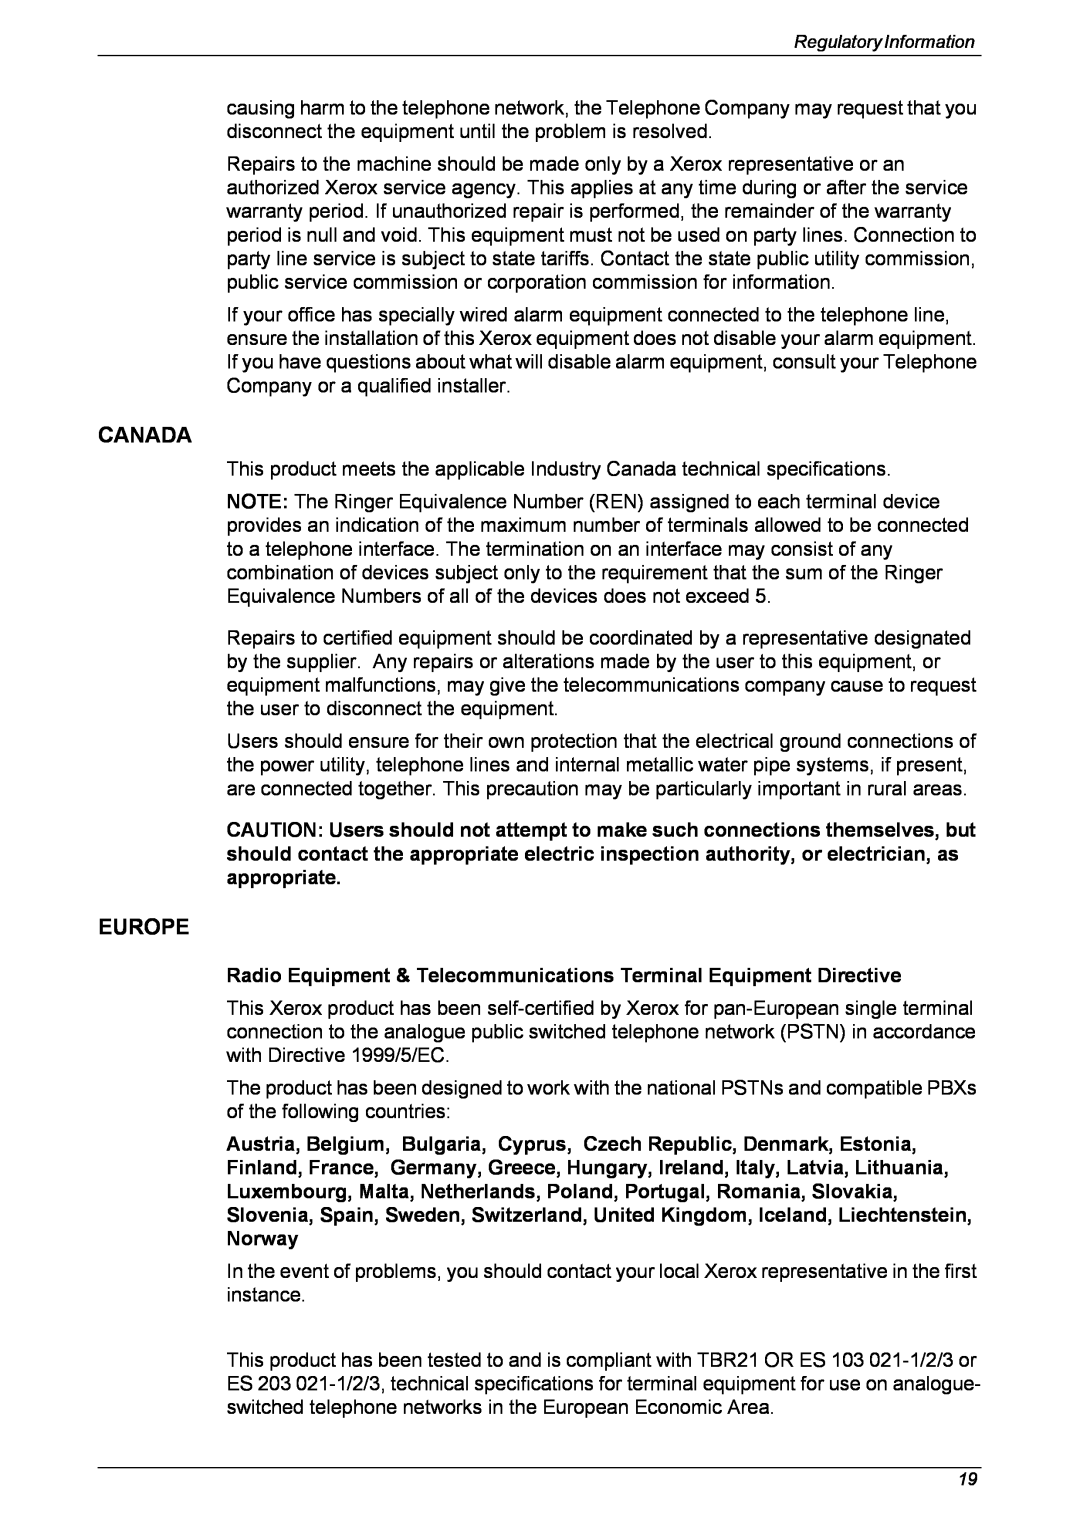 Xerox 5230 manual Canada, Europe, Regulatory Information 